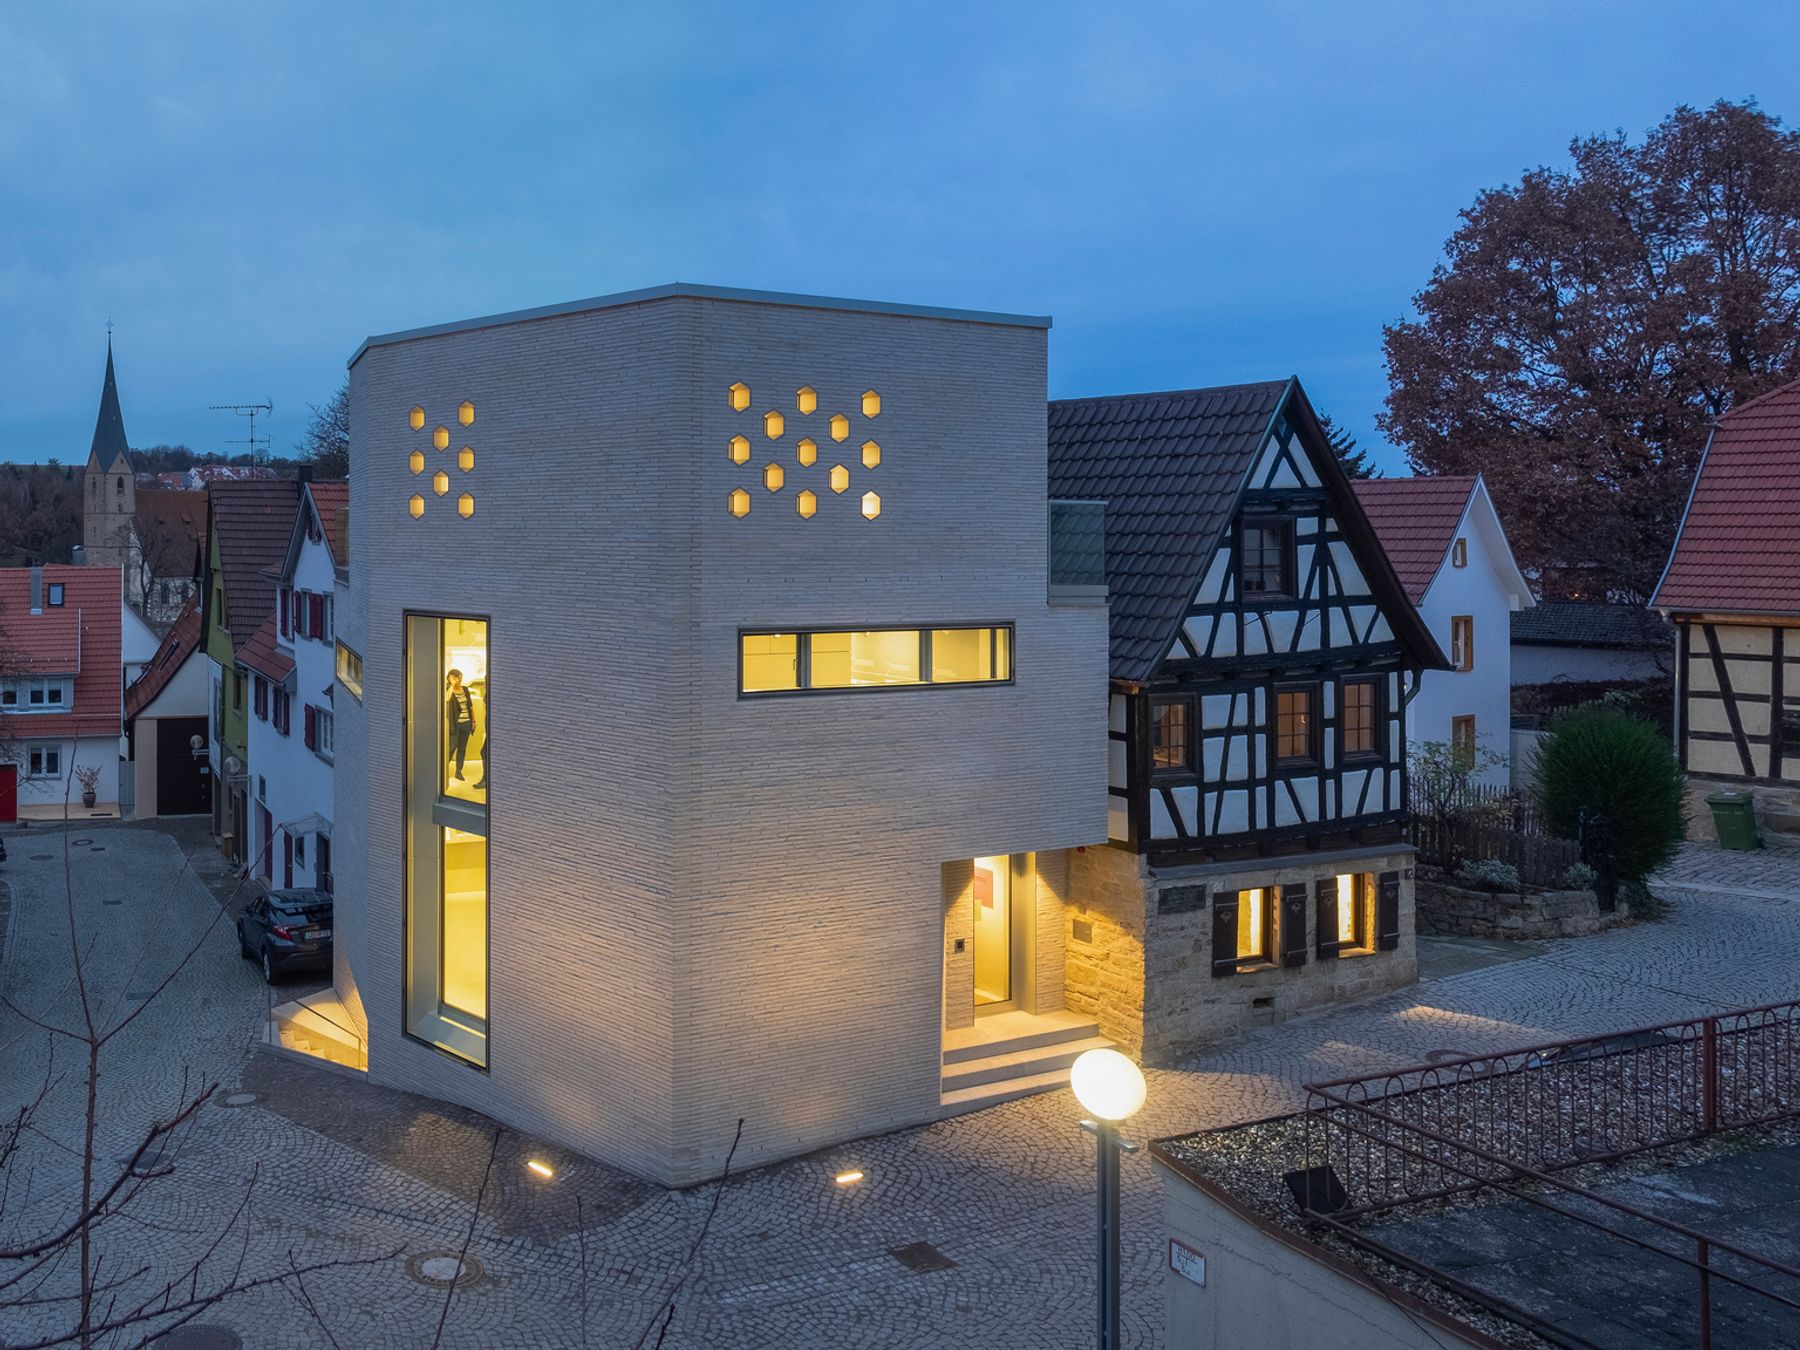 Tobias Mayer Museum, Marbach. Architecture: Webler + Geissler Architects, Stuttgart. Exhibition: Vista Rasch, Leinfelden-Echterdingen. Lighting design: pbe-Beljuli, Pulheim. Photography: Sebastian Mayer, Berlin.